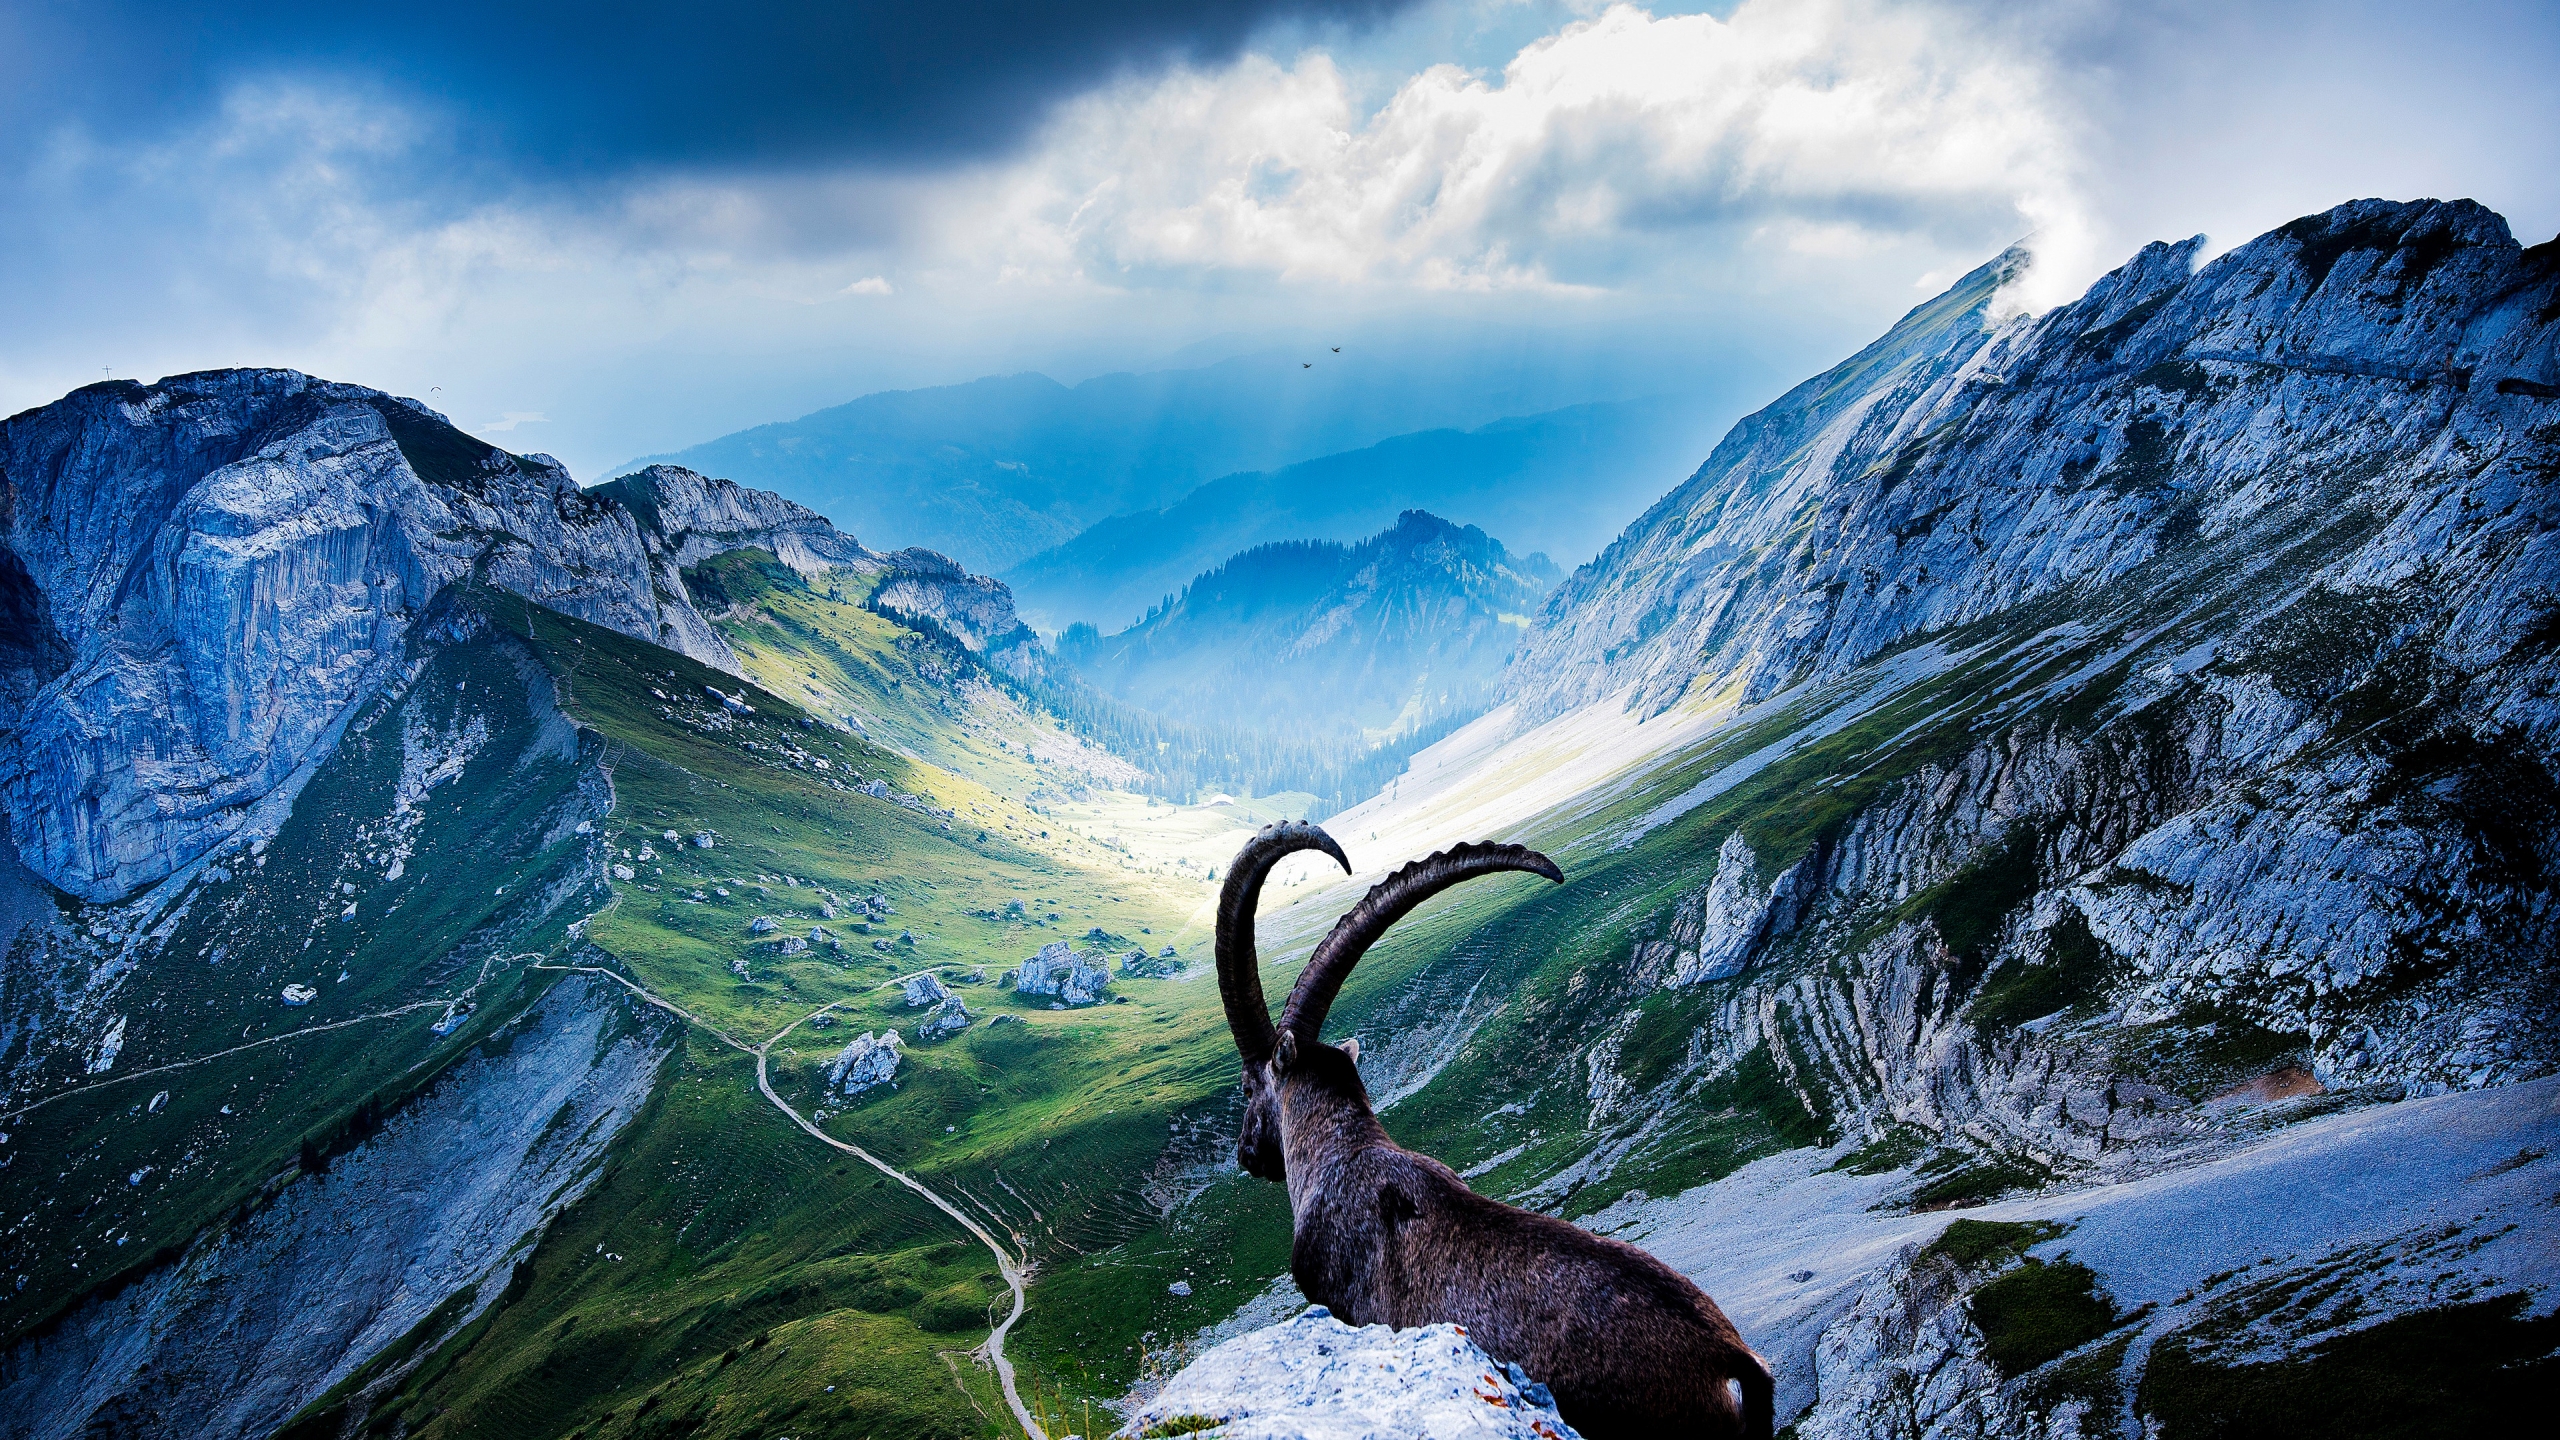 Goat at Mount Pilatus for 2560x1440 HDTV resolution